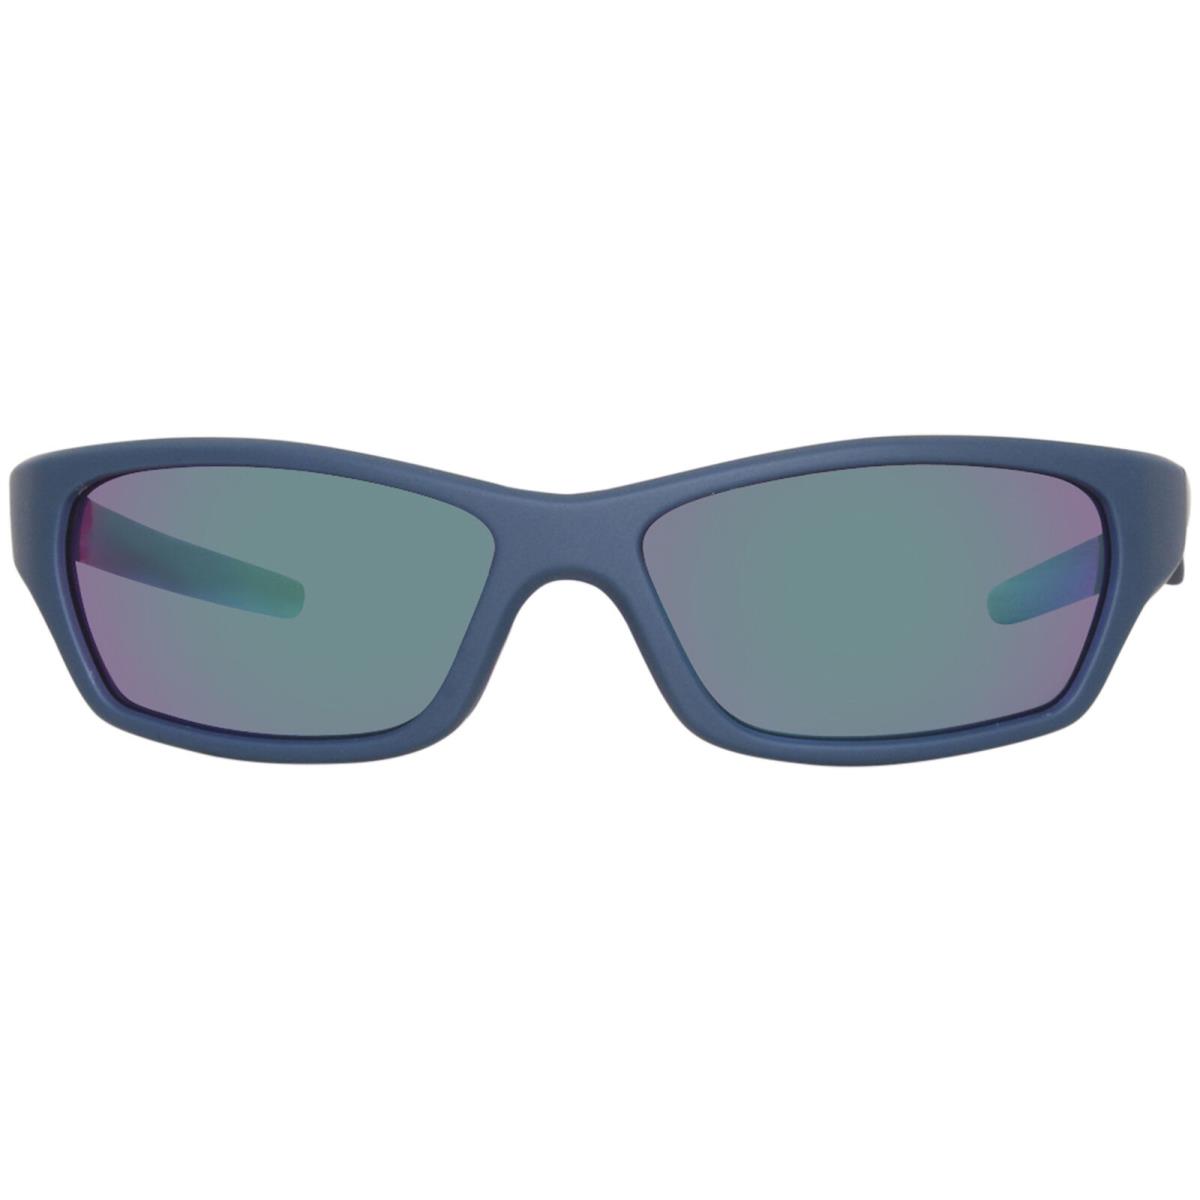 Nike Jolt-m DZ7379 402 Sunglasses Space Blue/grey/green Mirror Lenses 57mm - Frame: Blue, Lens: Gray